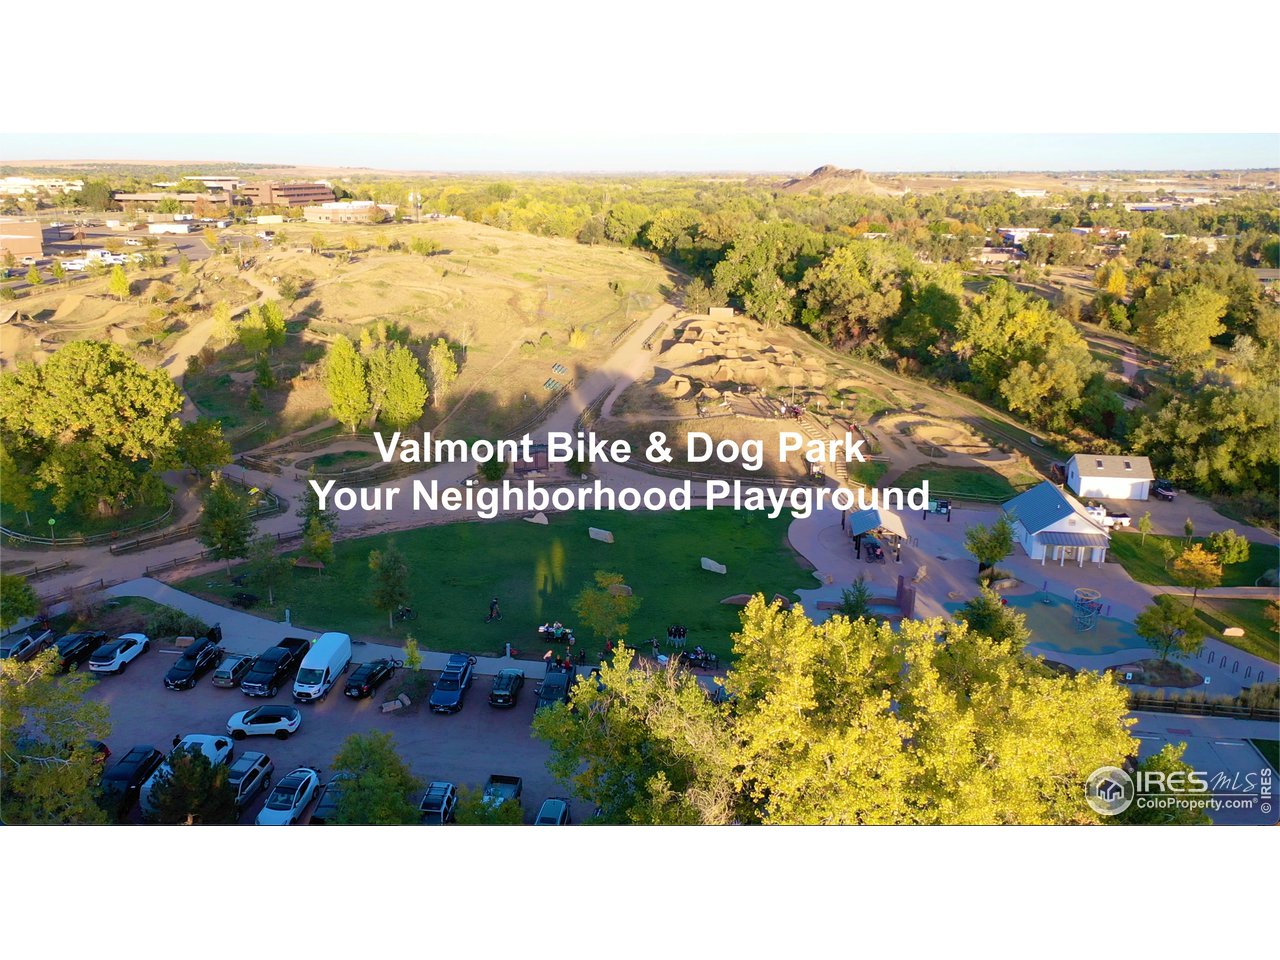 Valmont Bike & Dog Park right across the street